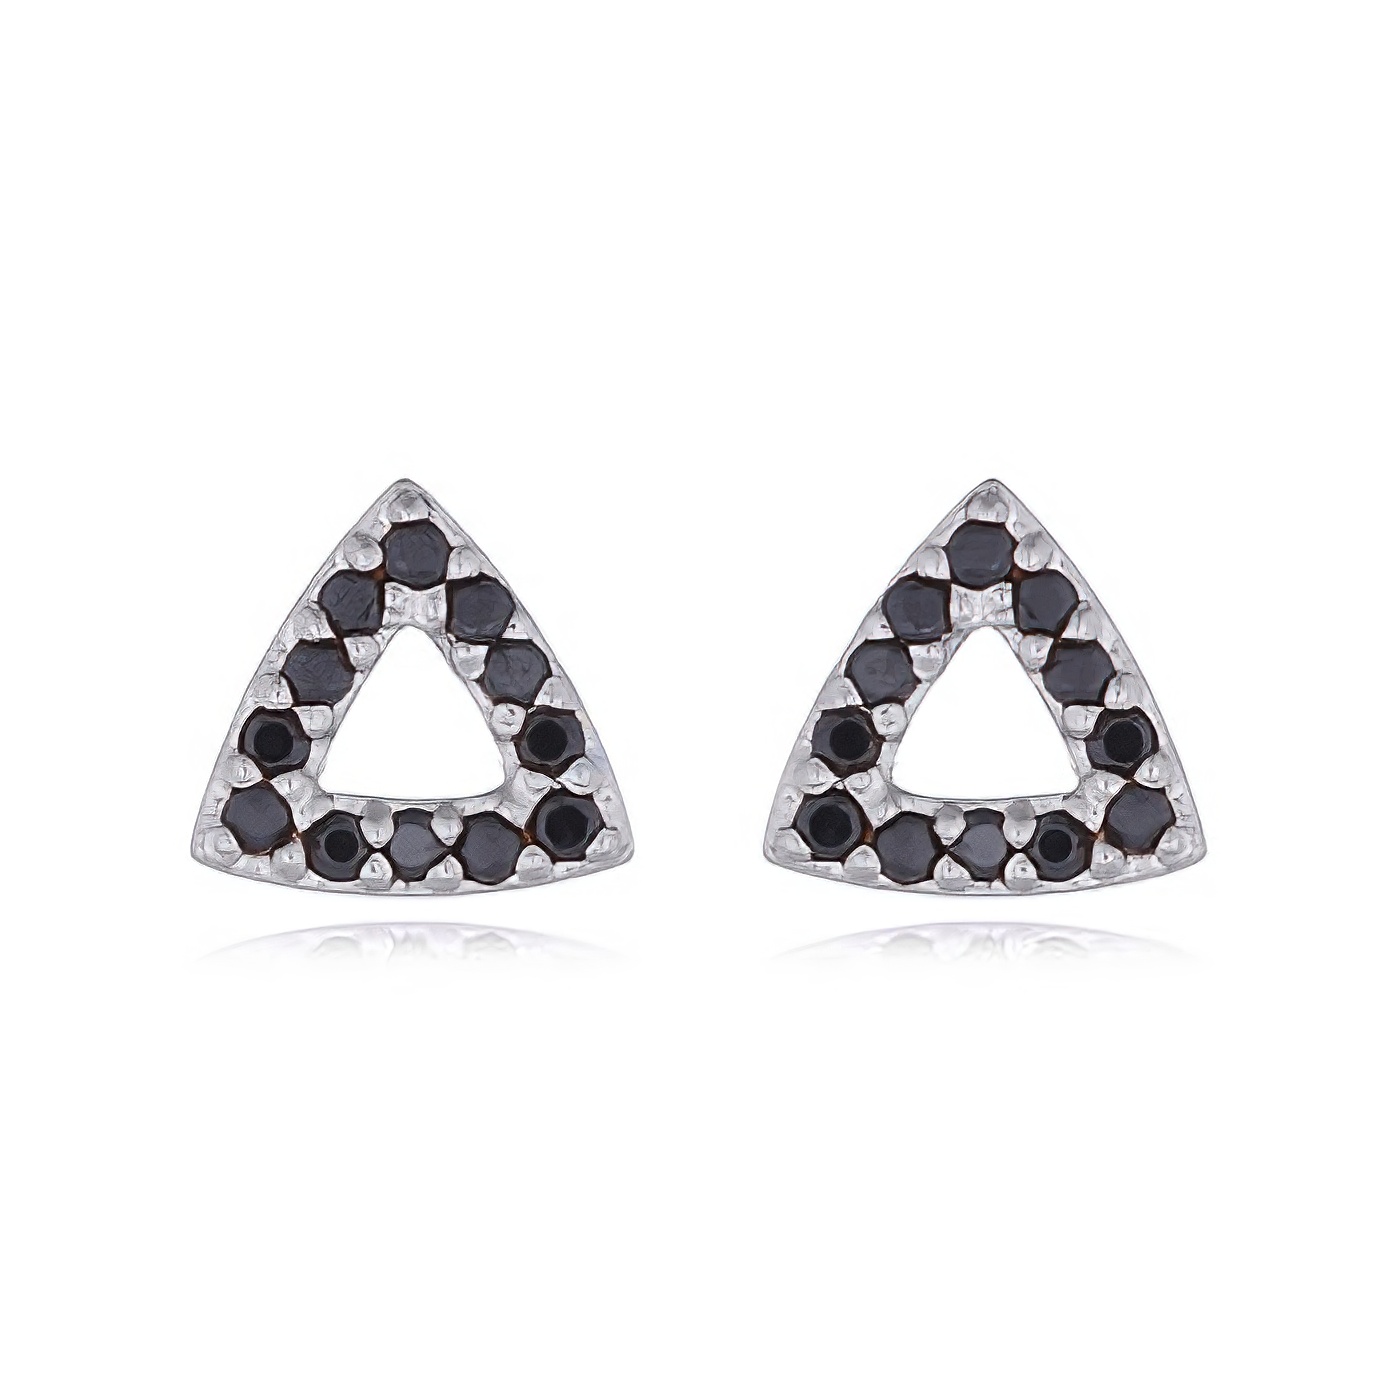 Cubic Black Zirconia Triangle Sterling Silver Stud Earrings by BeYindi 